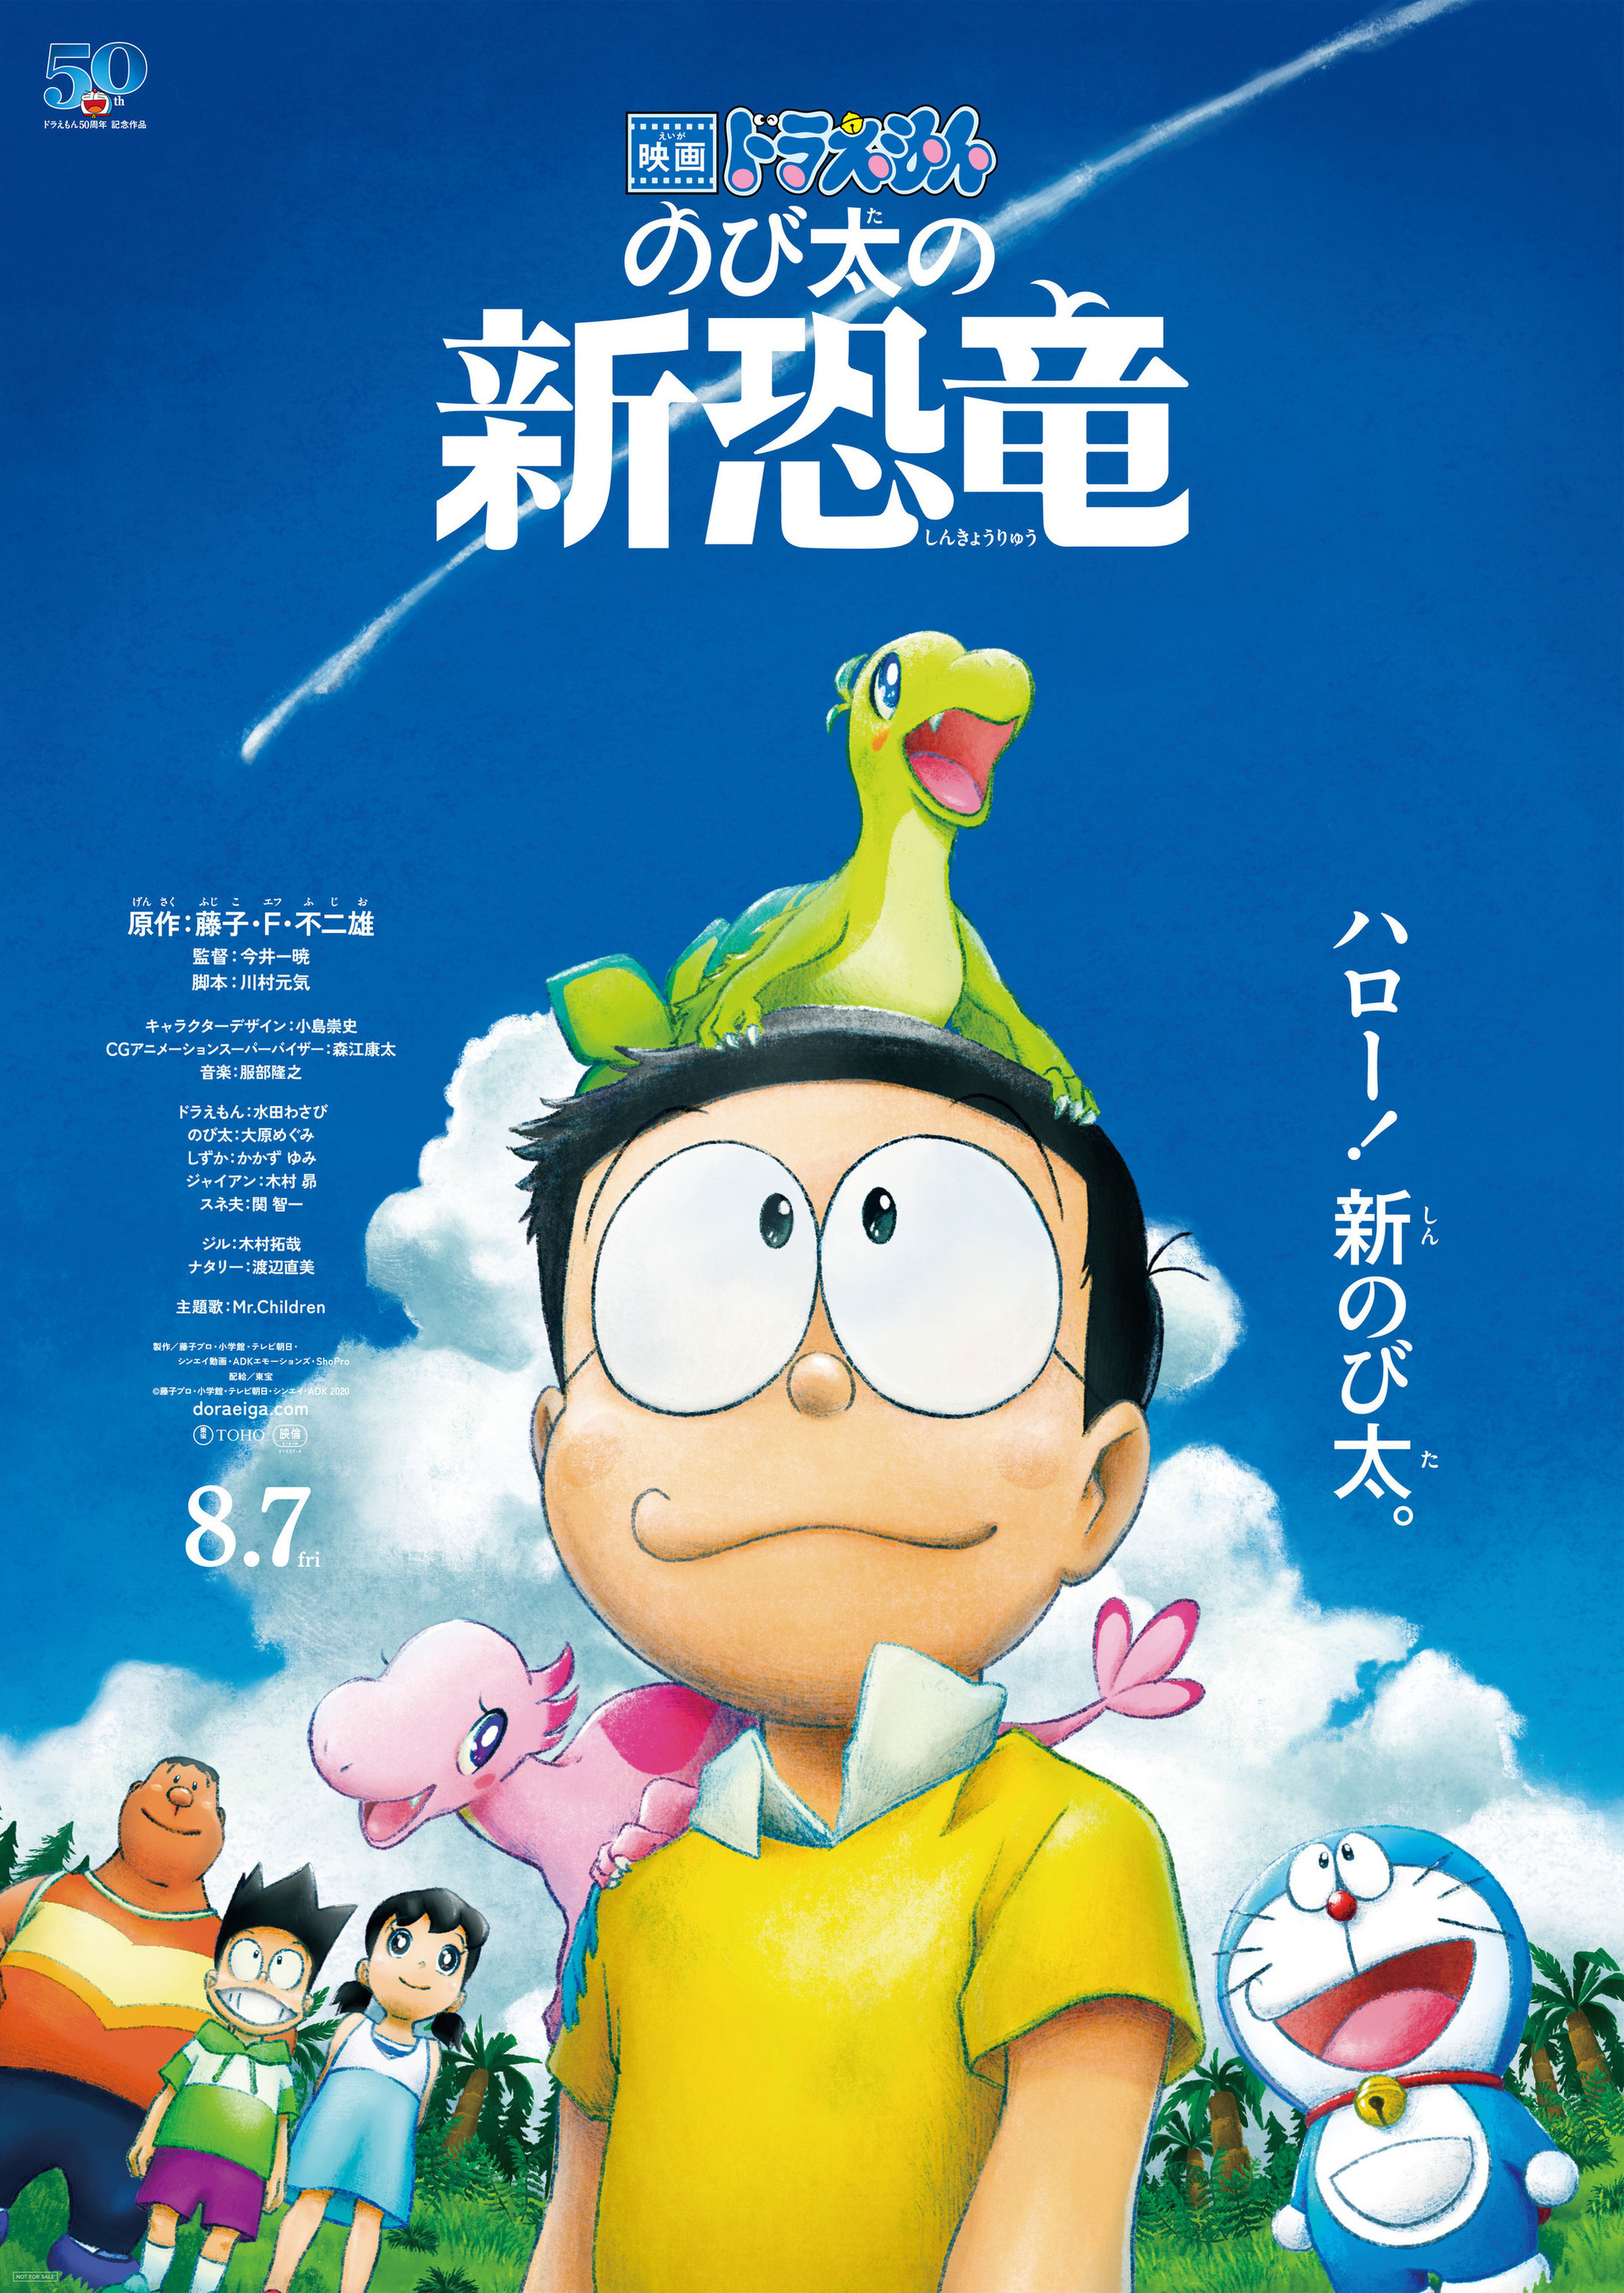 Mega Sized Movie Poster Image for Eiga Doraemon: Nobita no shin kyôryû 